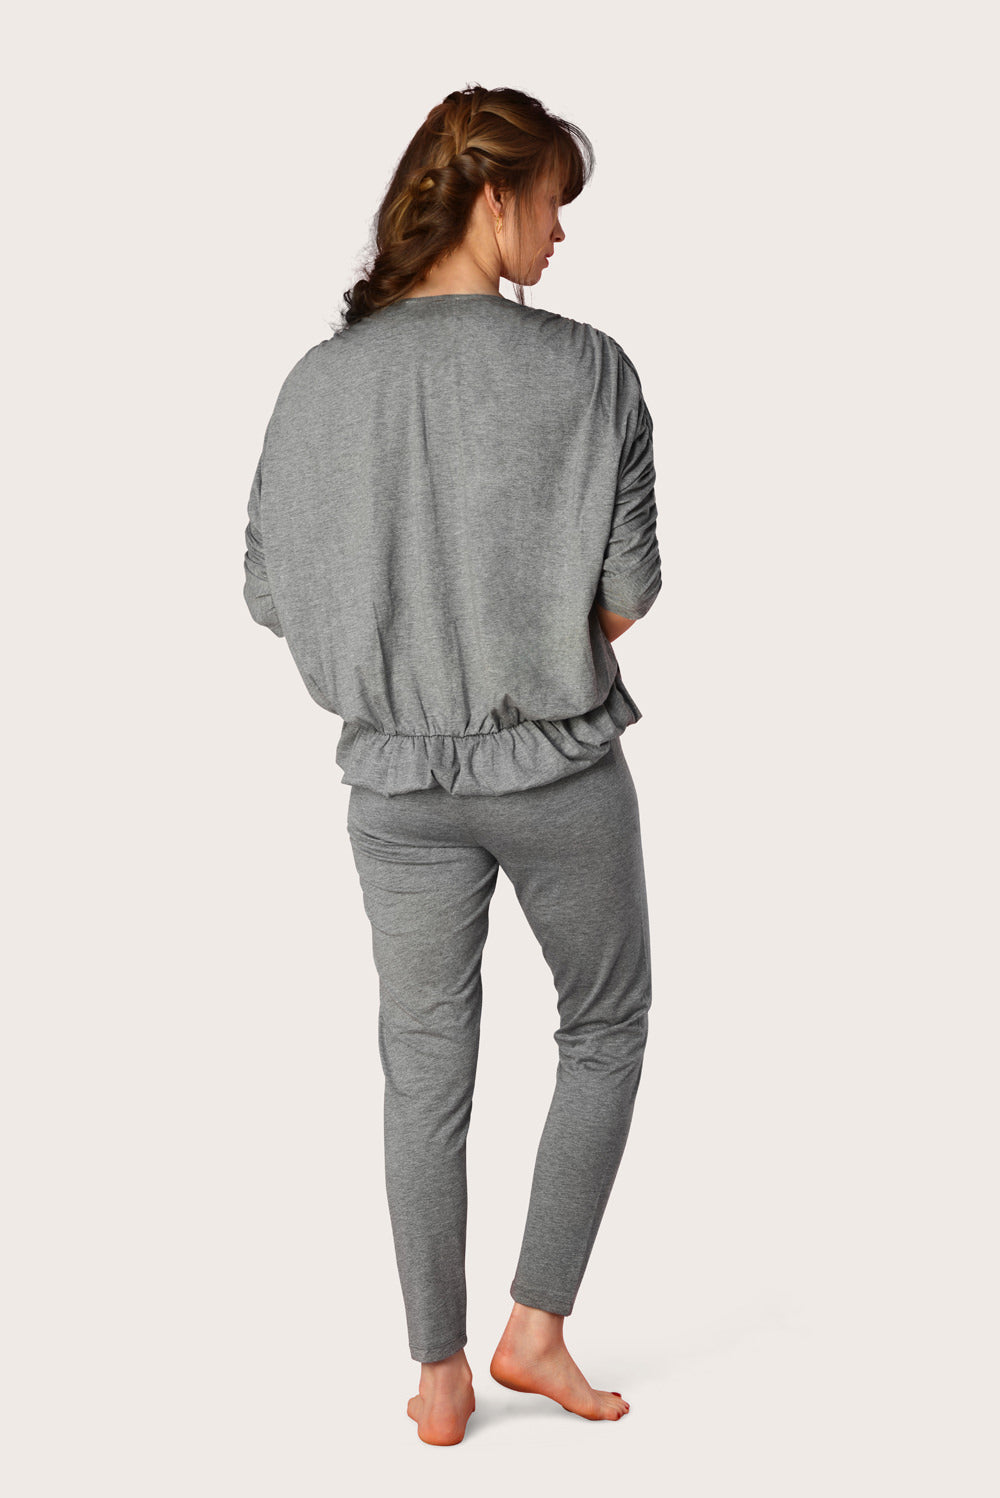 Melange Grey Cotton Modal maternity pyjama.  Super Comfortable Nightwear and Loungewear 